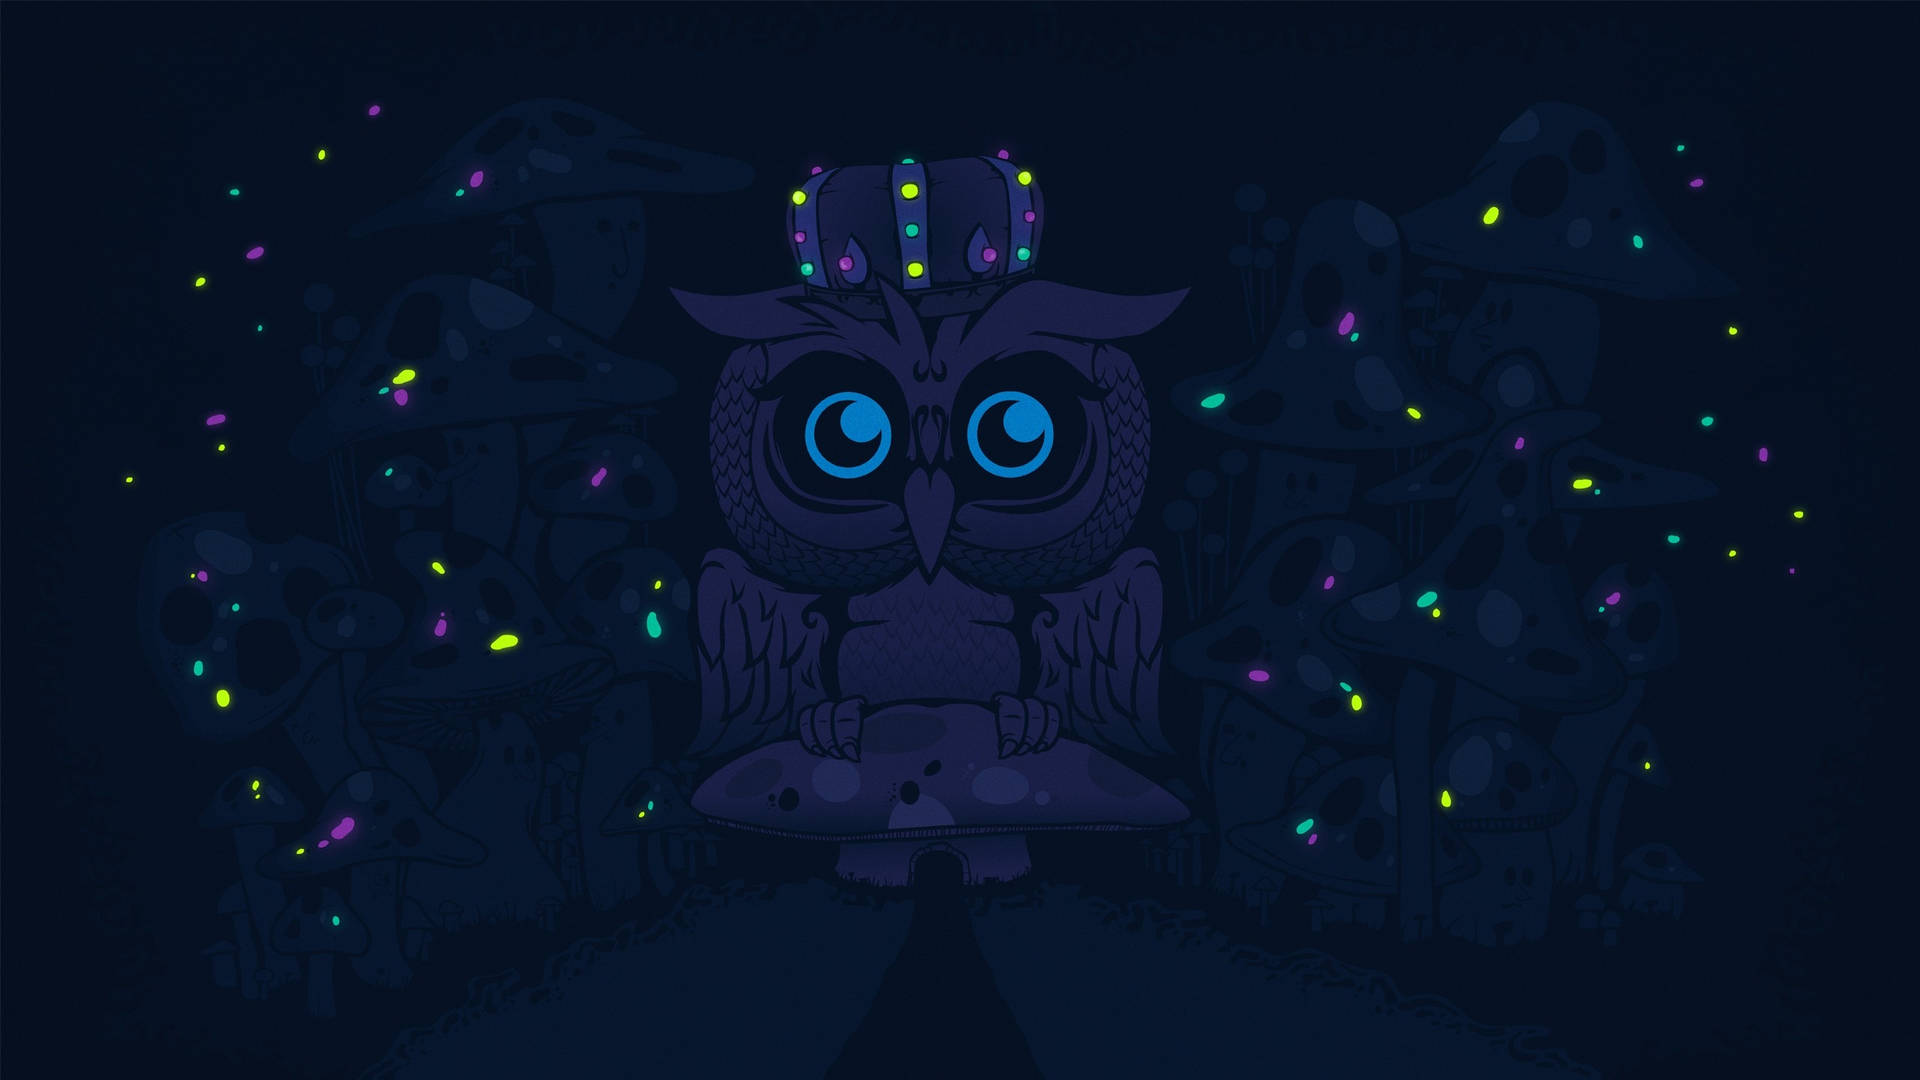 Blue Owl Digital Art